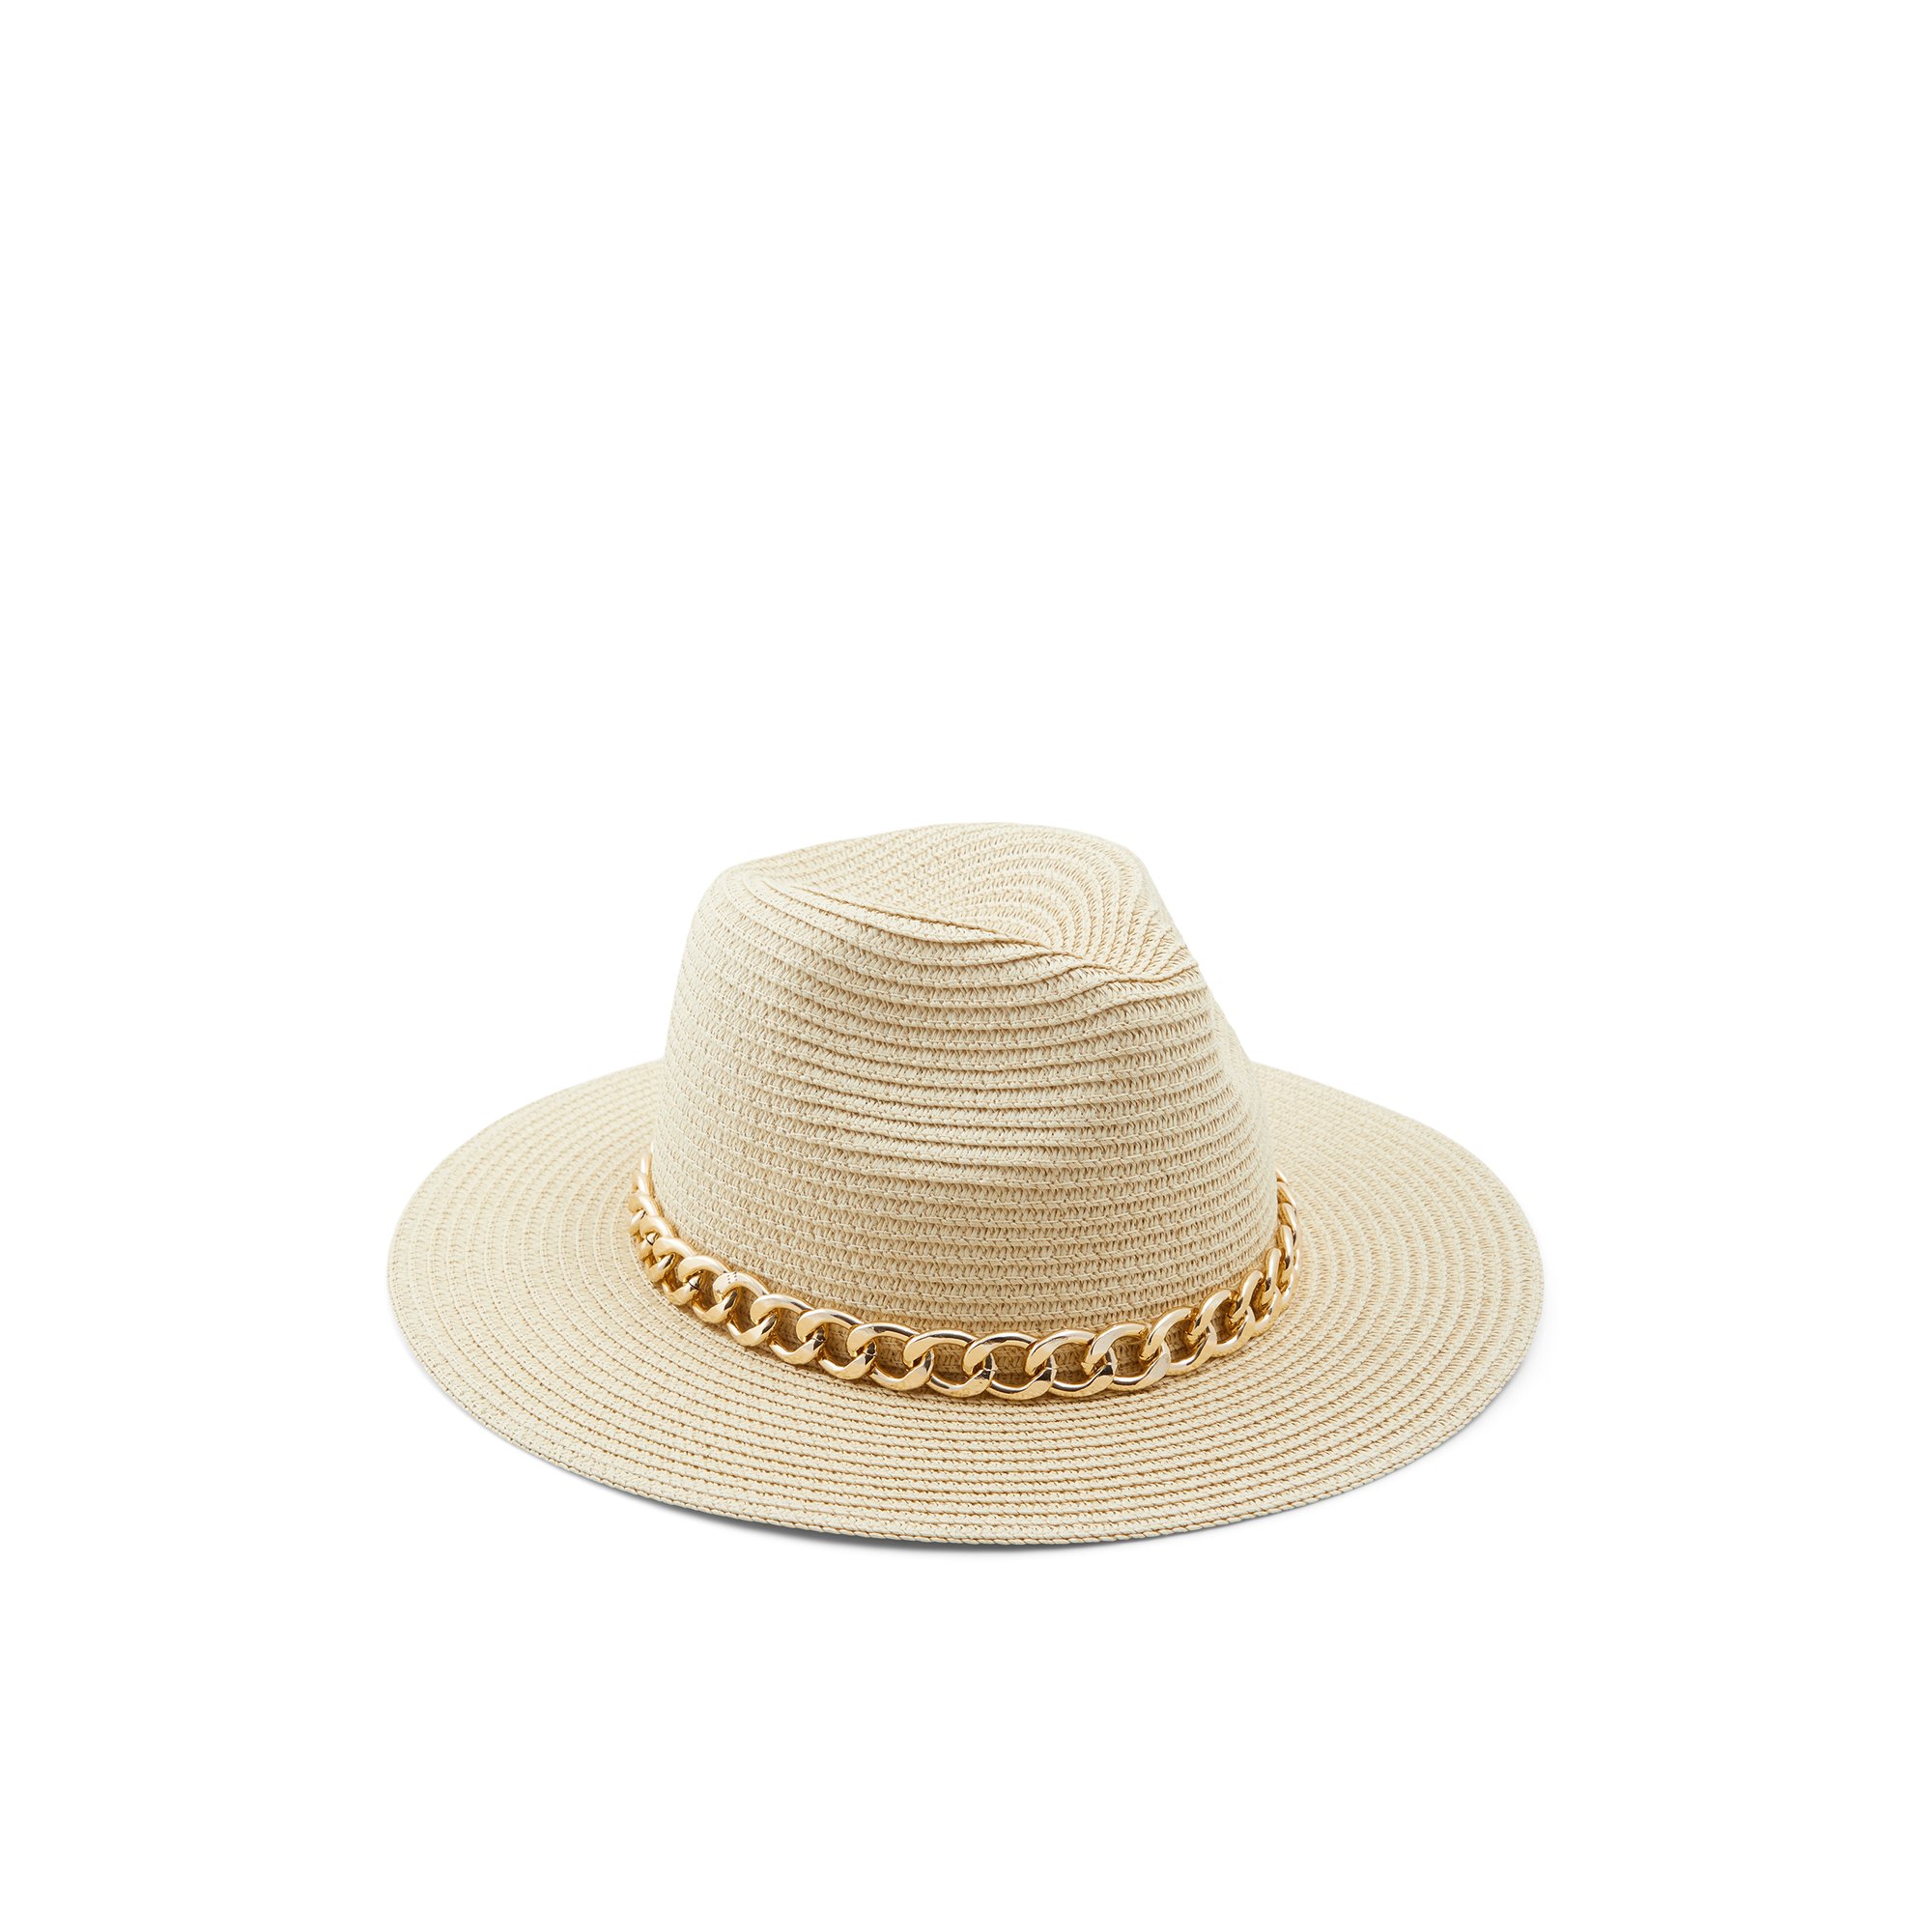 Image of ALDO Broeni - Women's Hat Hats, Gloves & Scarve - Beige, Size M/L